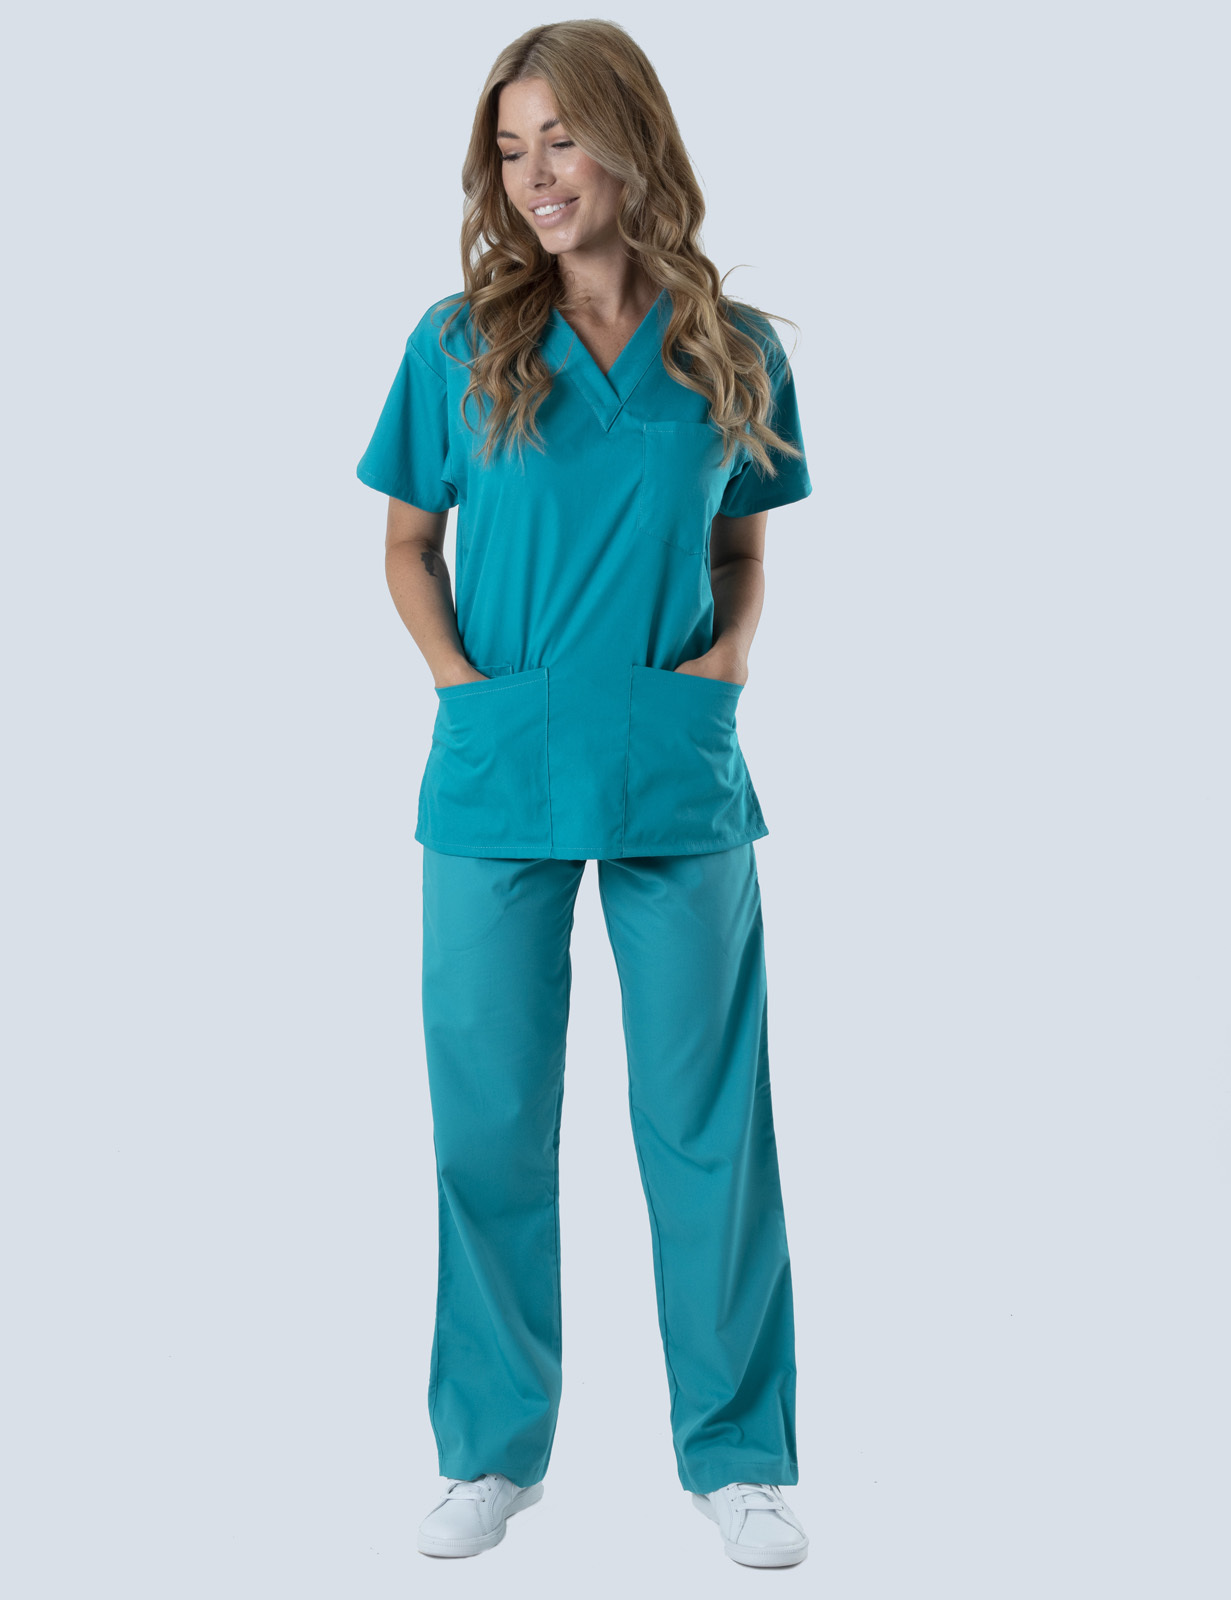 Flinders Medical Centre - Endorsed Nurse (4 Pocket Scrub Top and Cargo Pants in Teal incl Logos)